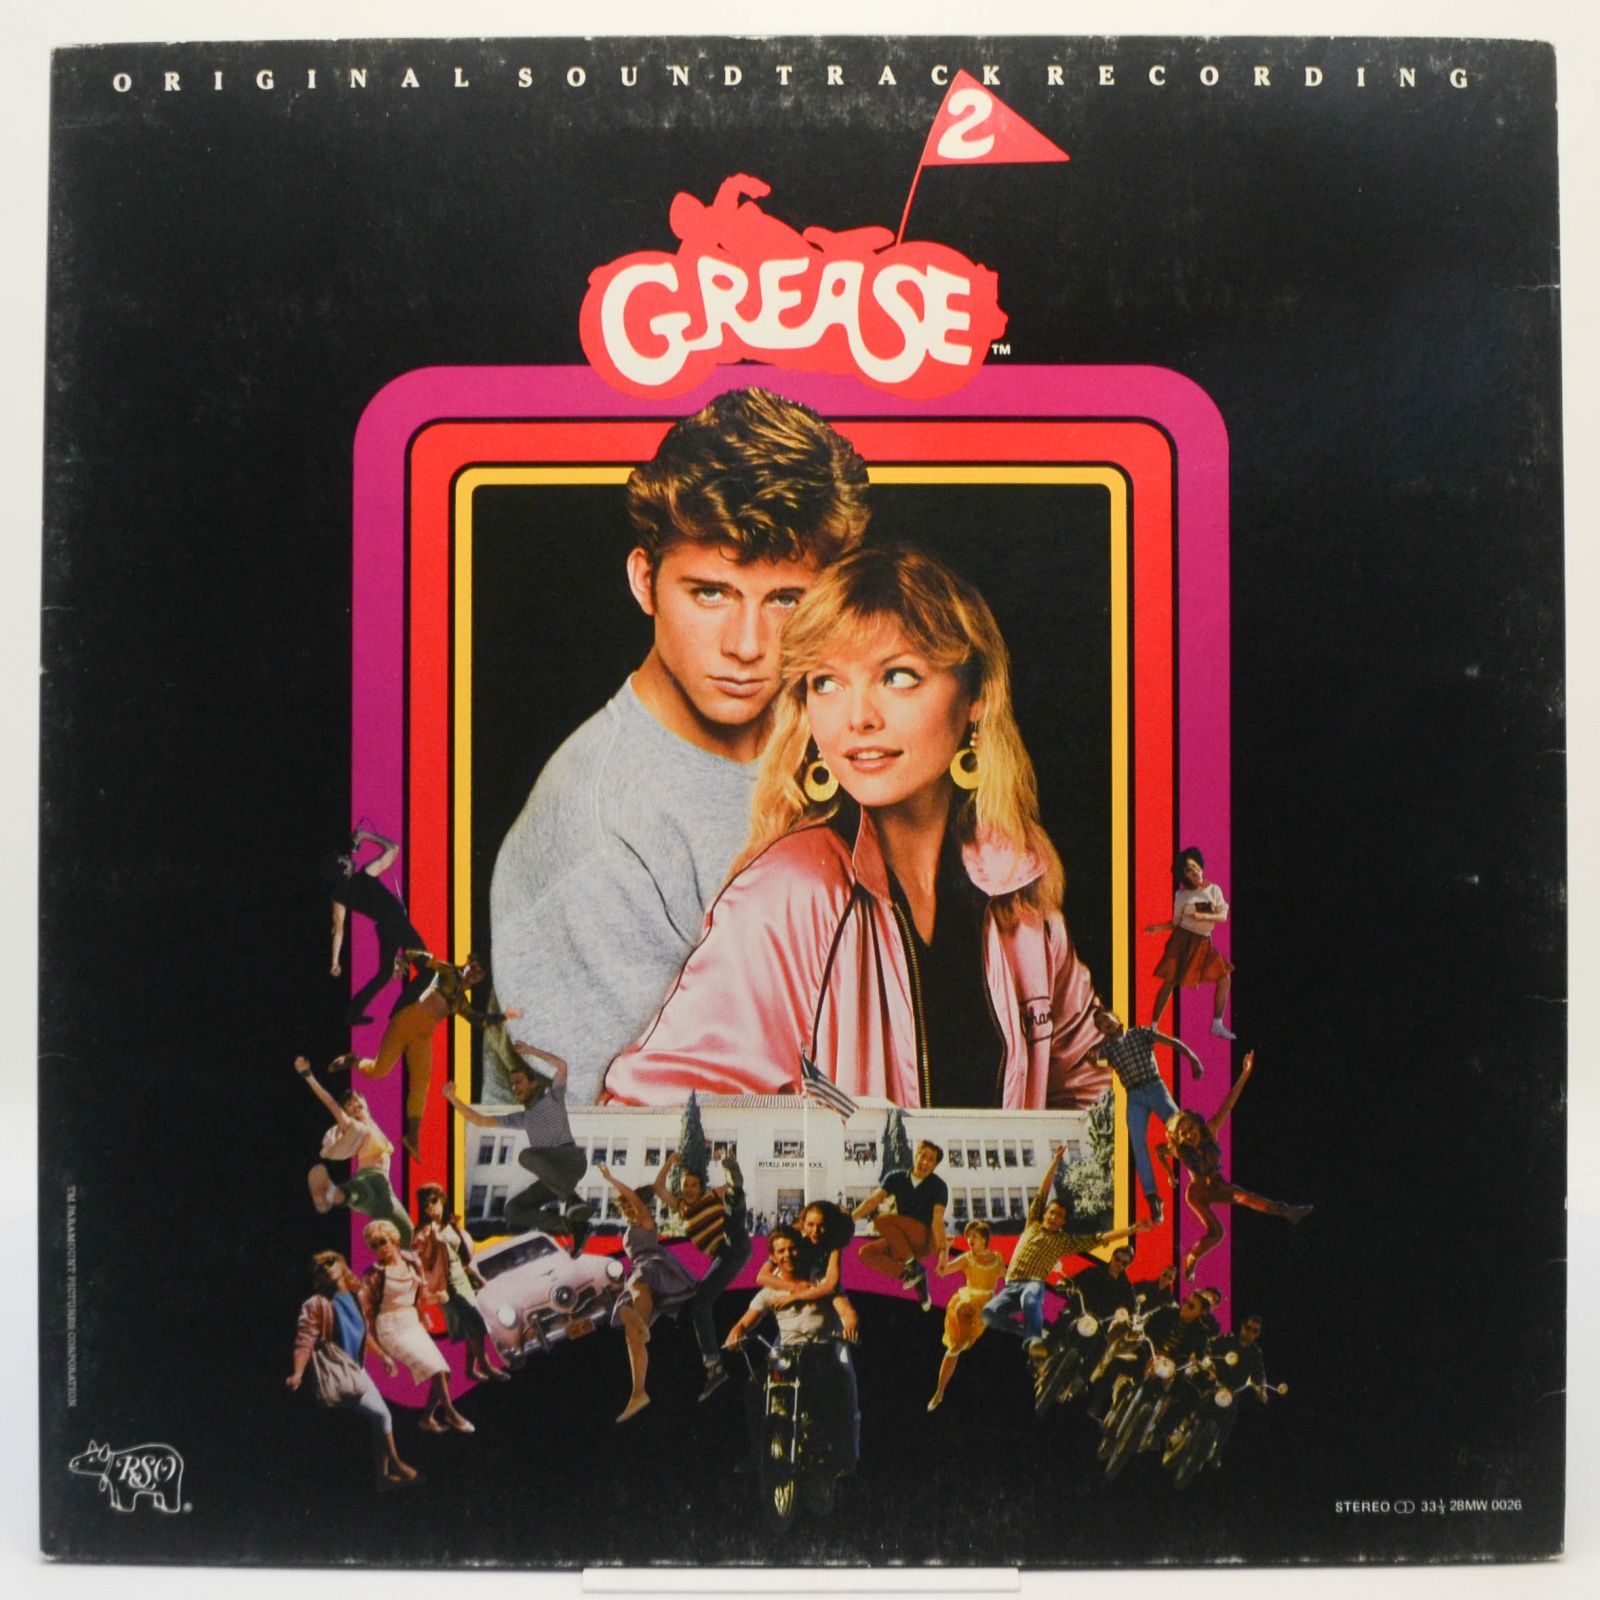 Grease 2 (Original Soundtrack Recording), 1982